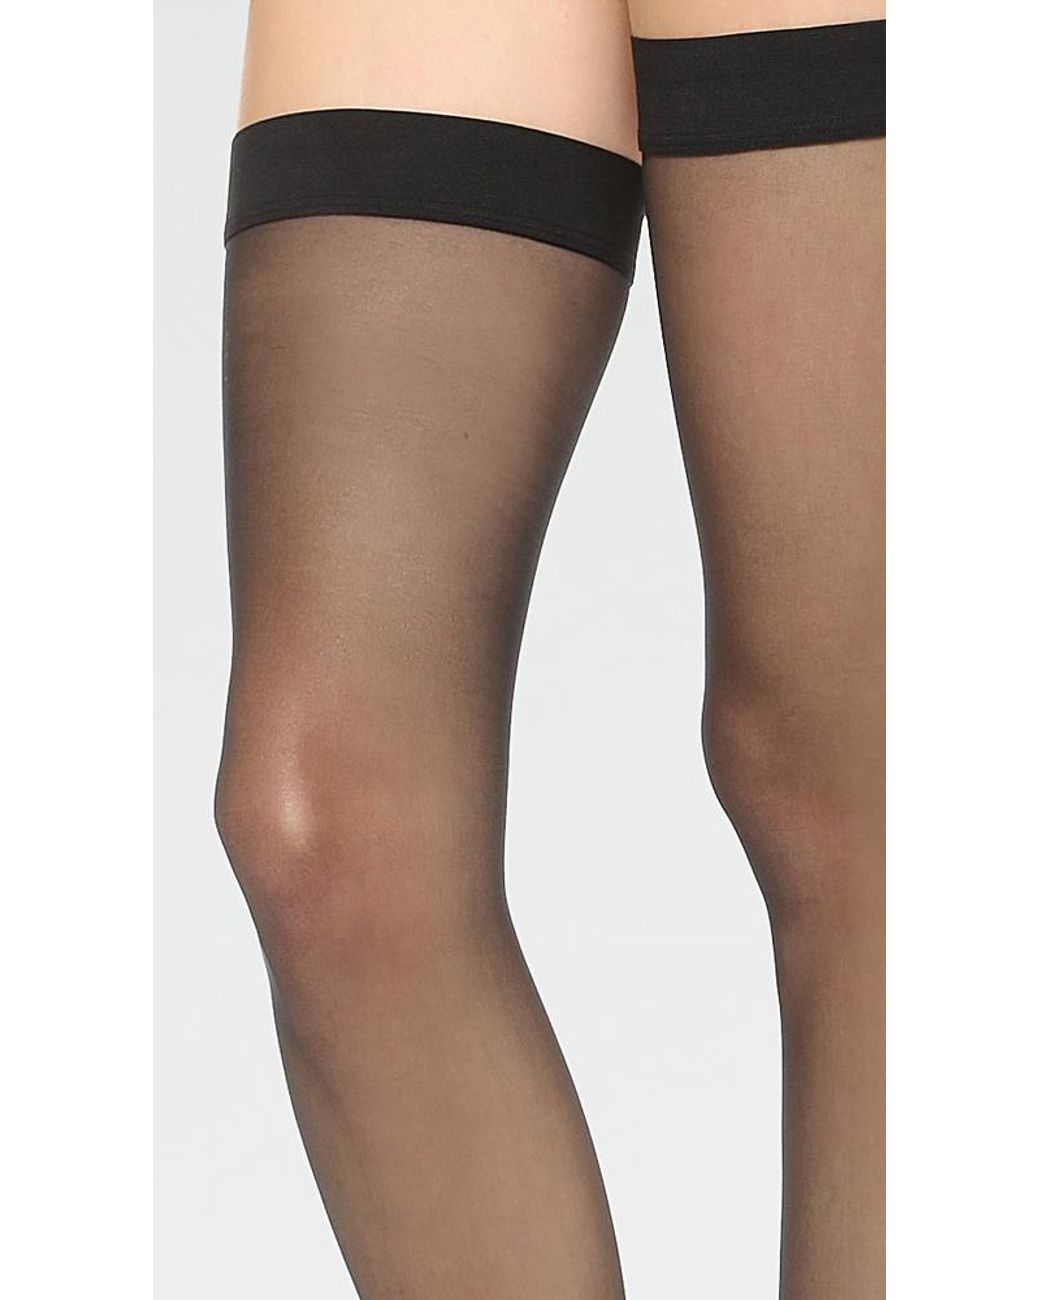 Womens Clothing Hosiery Stockings Wolford Synthetic Socks & Hosiery in Black 